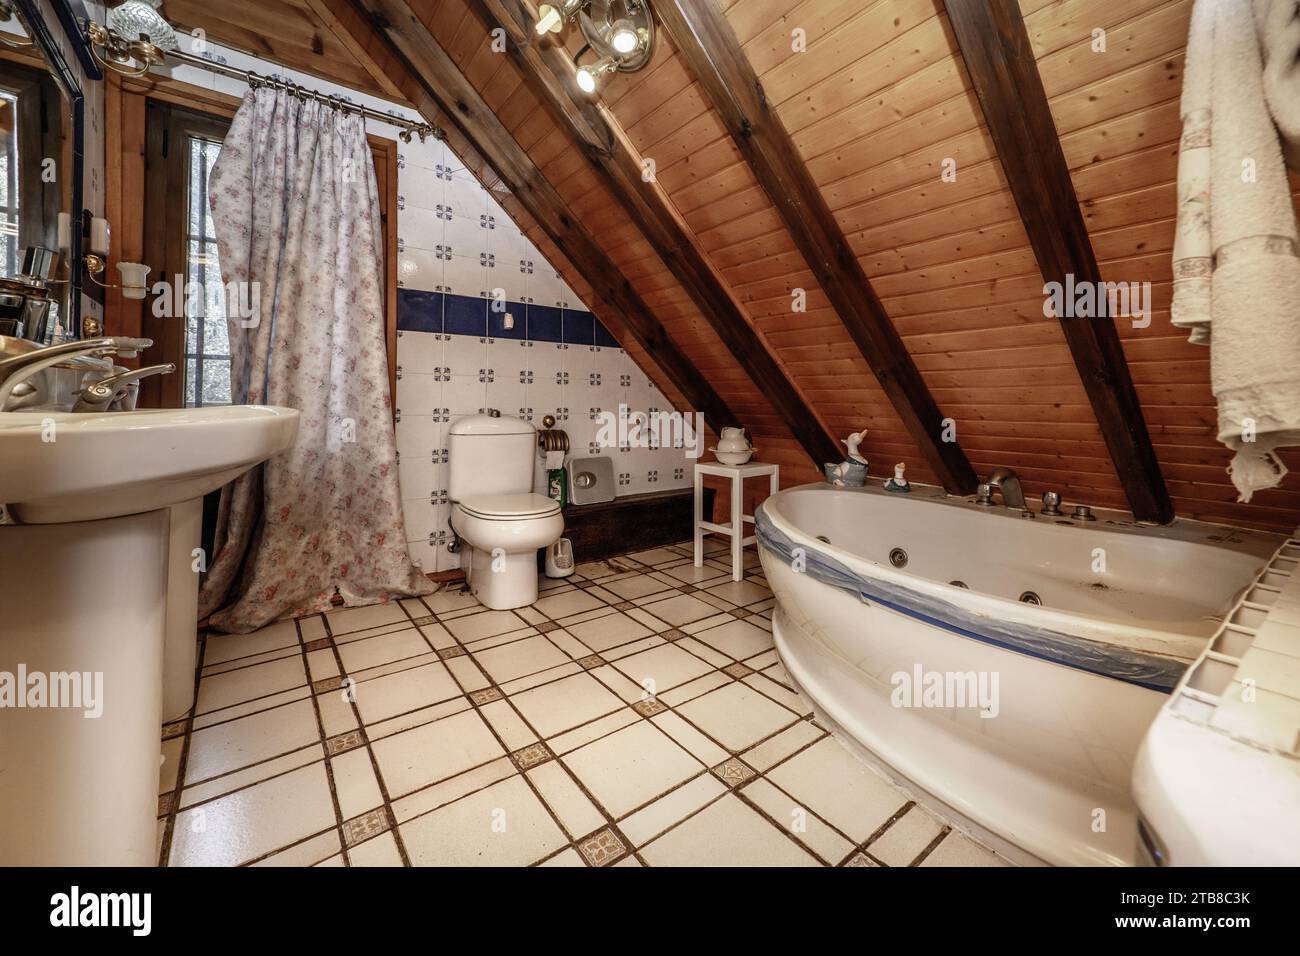 Log cabin bathroom with whirlpool tub Stock Photo